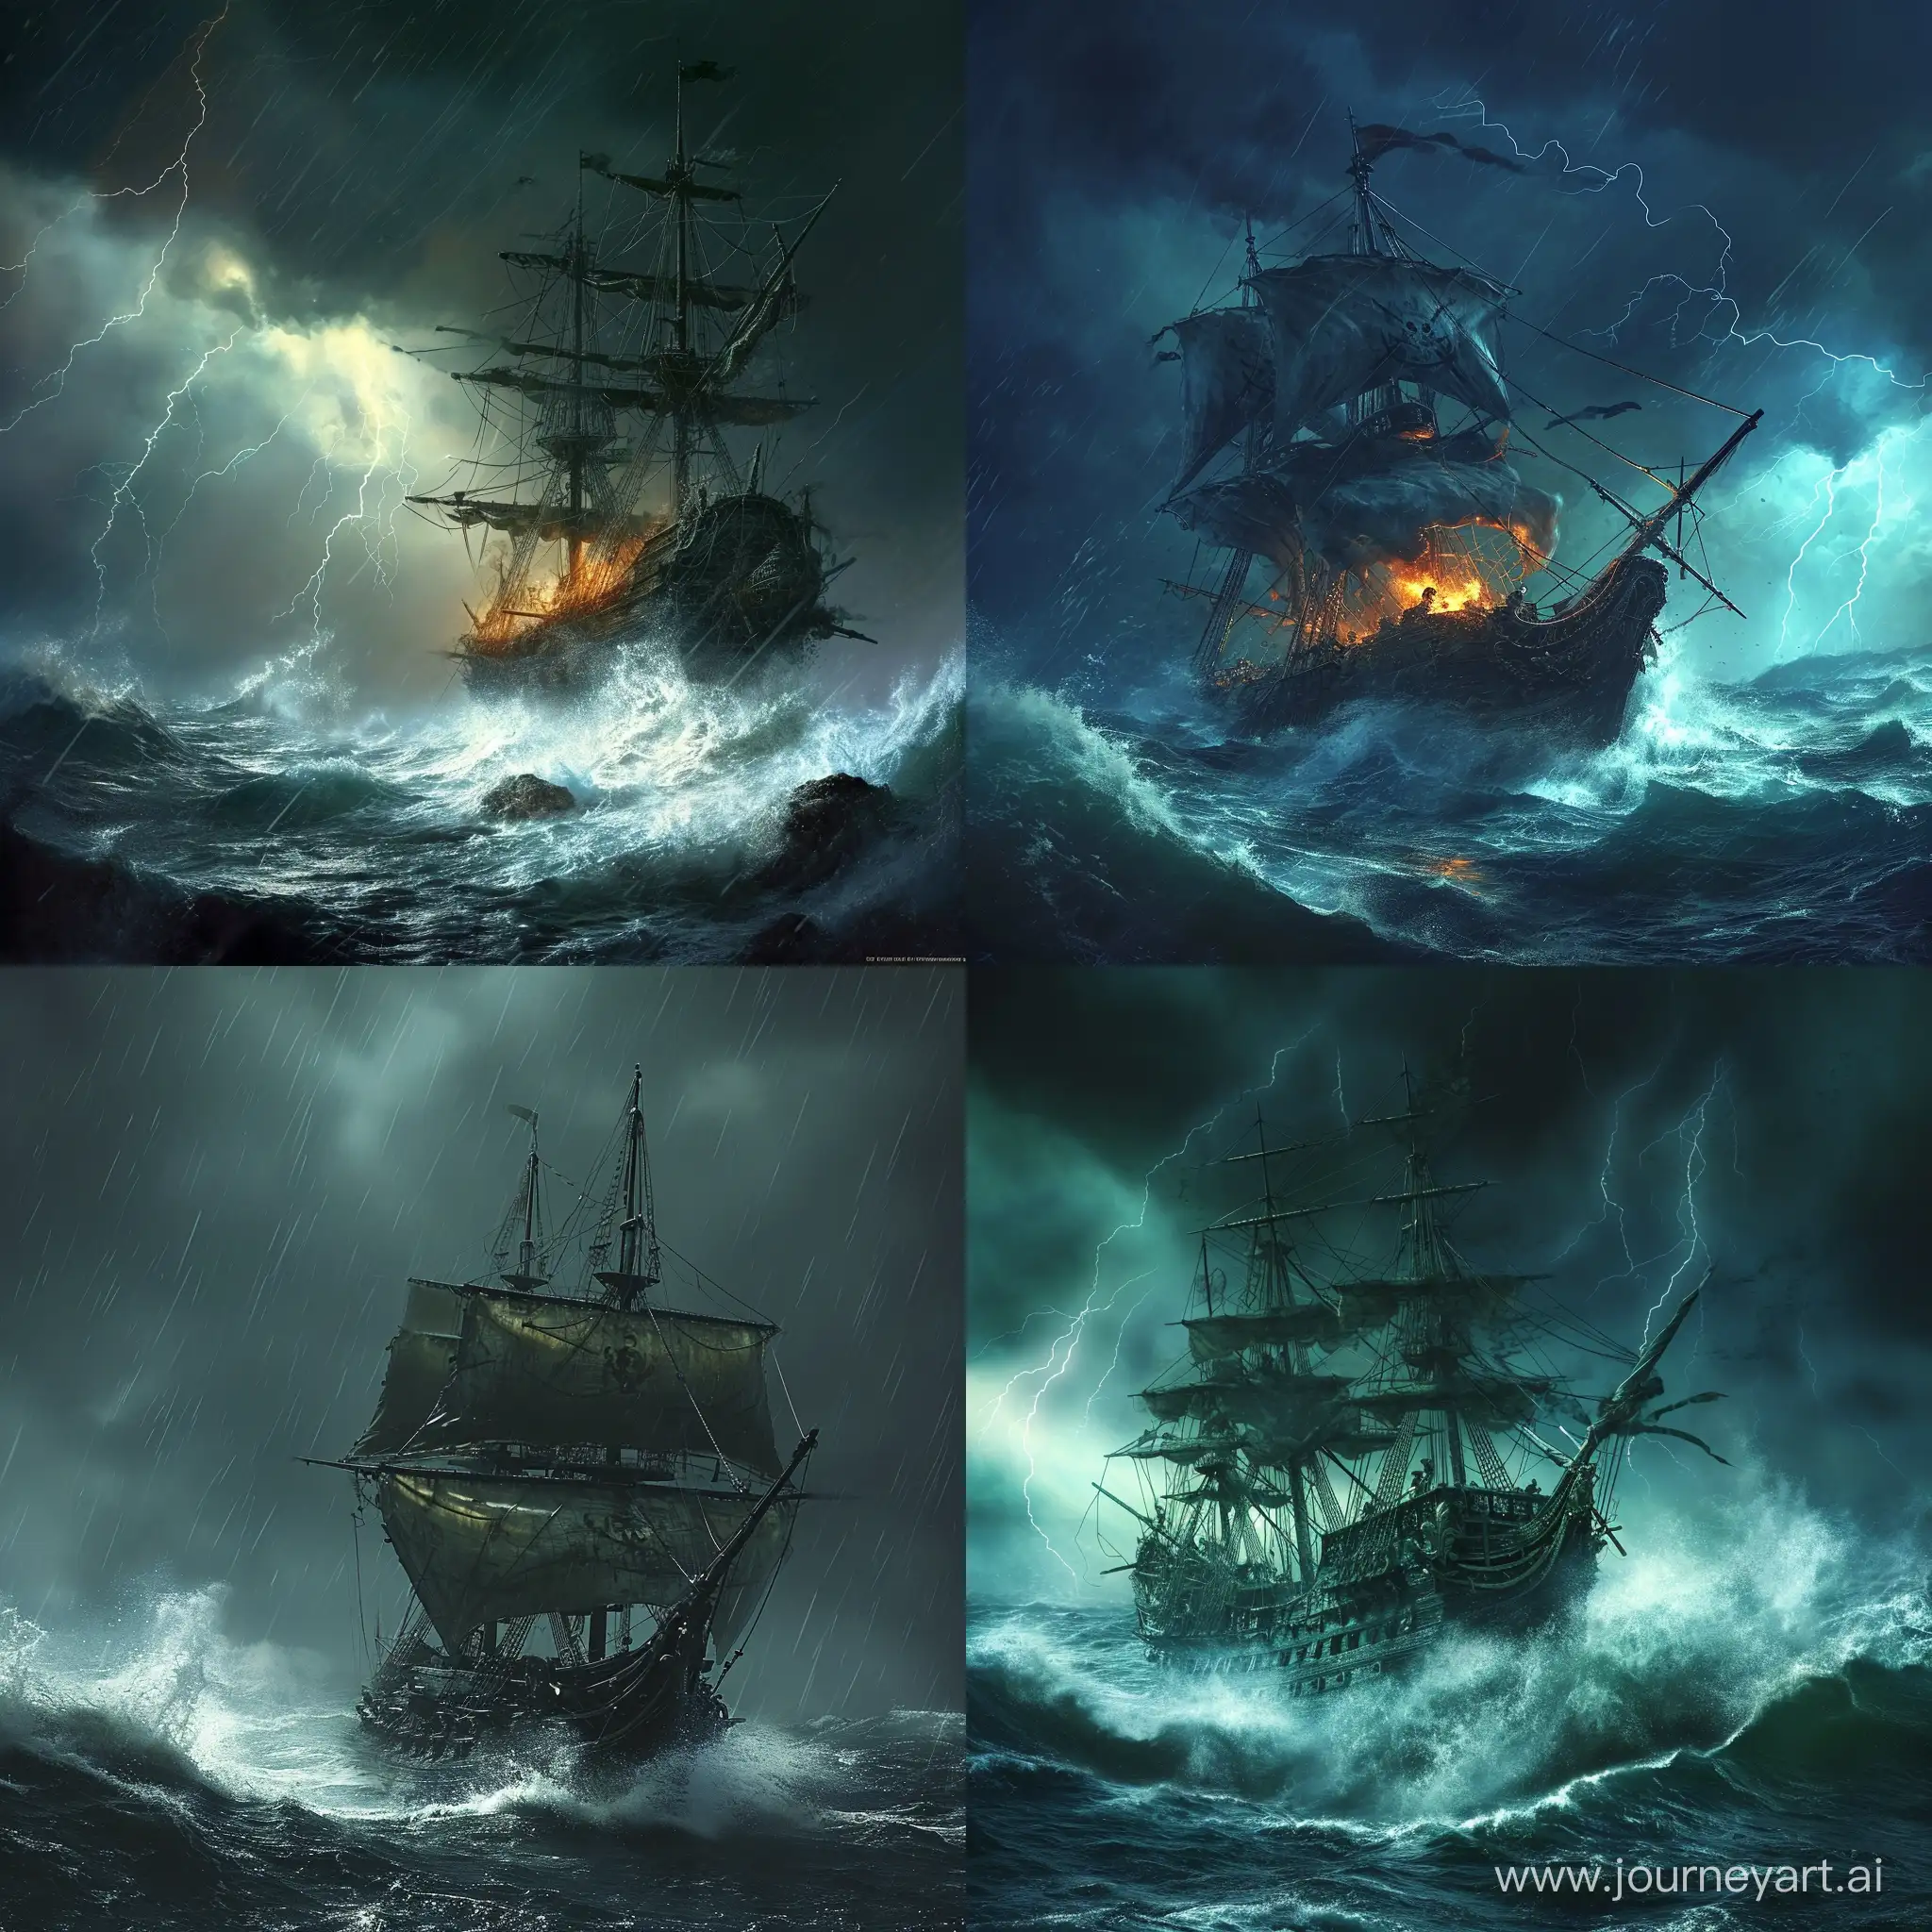 Pirate-Ship-Battling-Stormy-Seas-Artwork